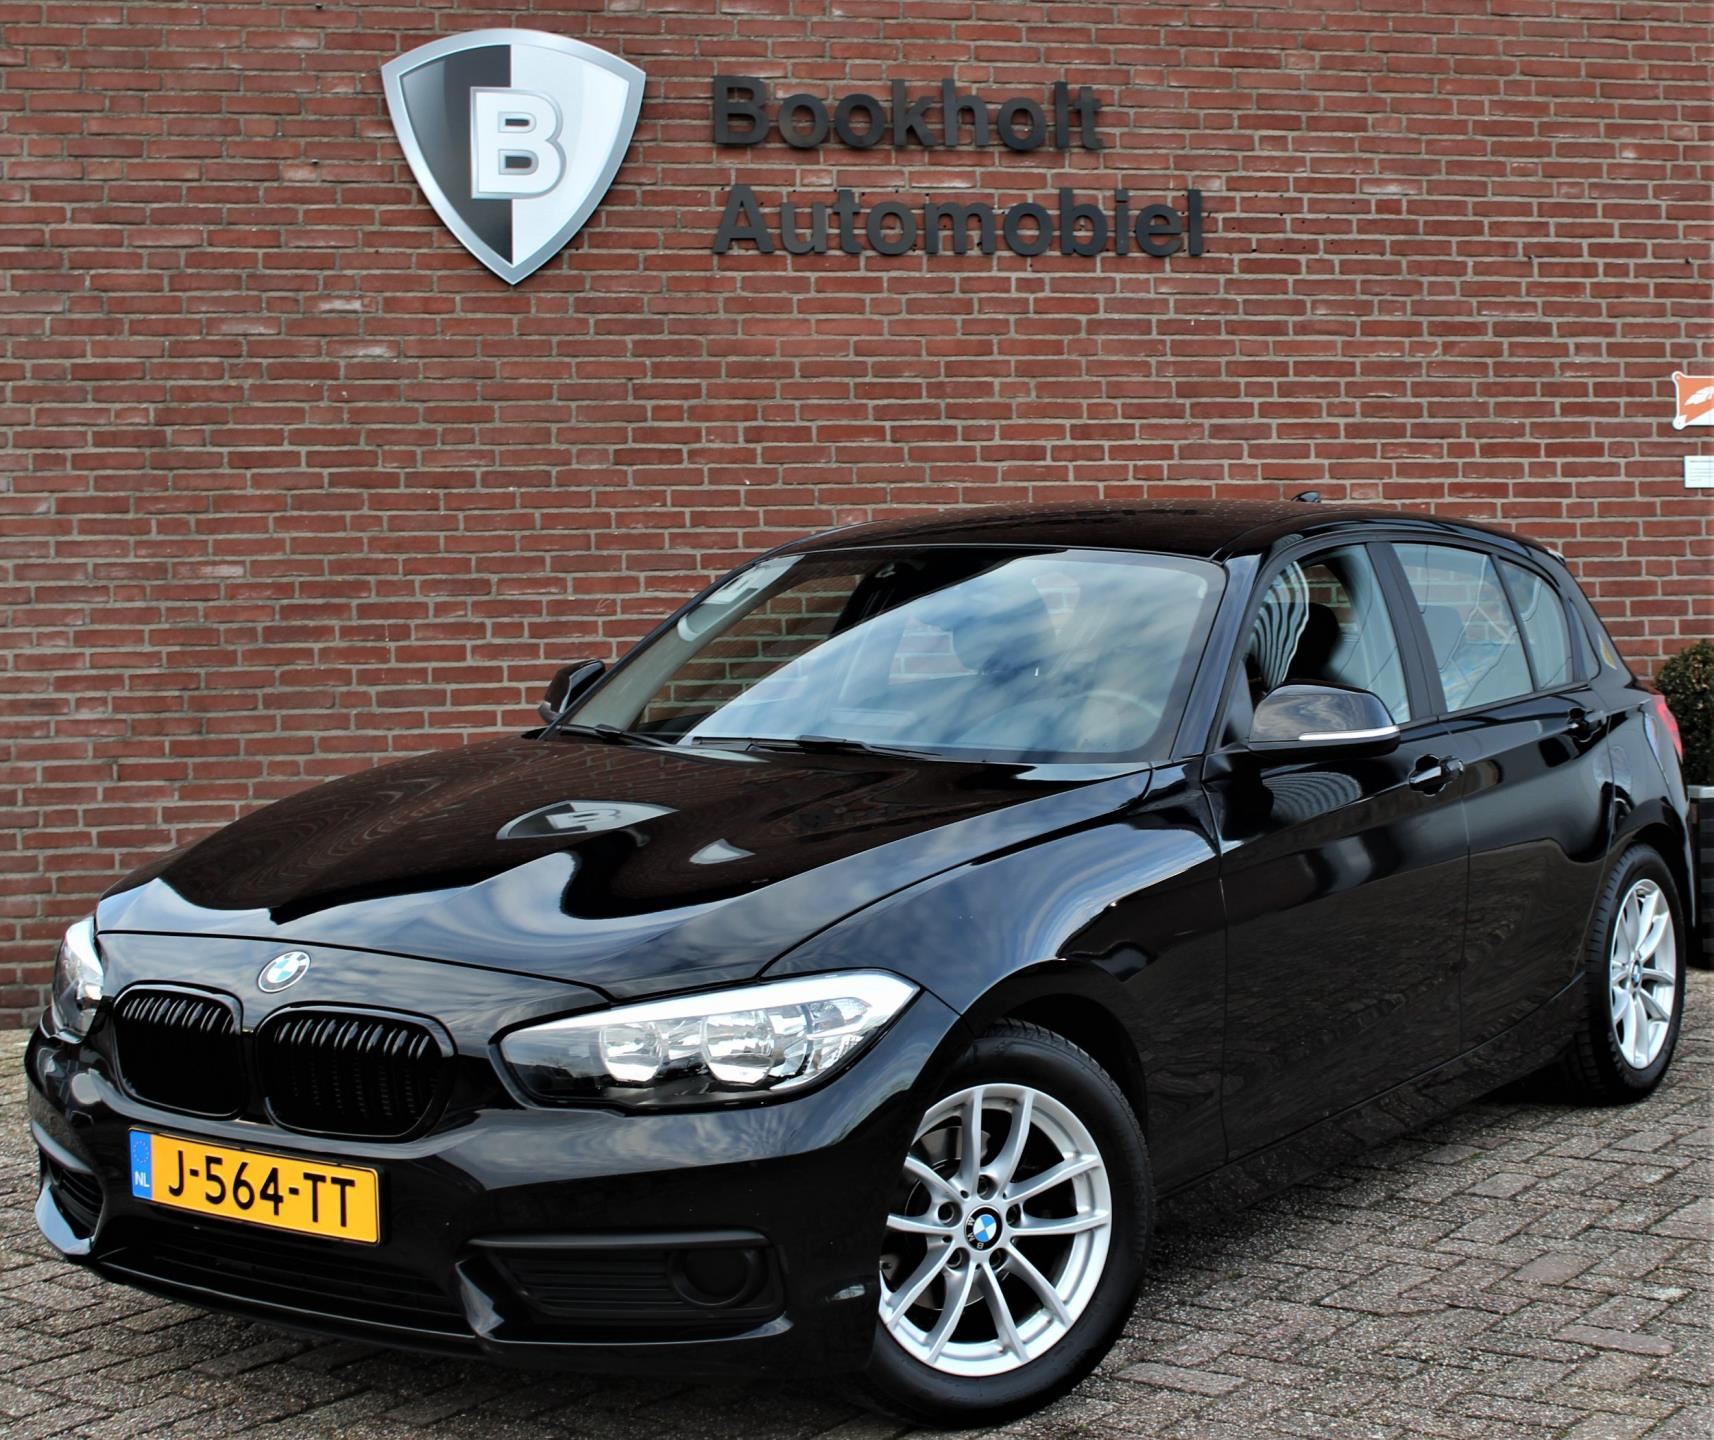 oogst eenheid Geen BMW 1-serie - 116d EDE LCI (Facelift), LED, Navi, M- grille, 16" LMV Diesel  uit 2016 - www.bookholt-automobiel.nl